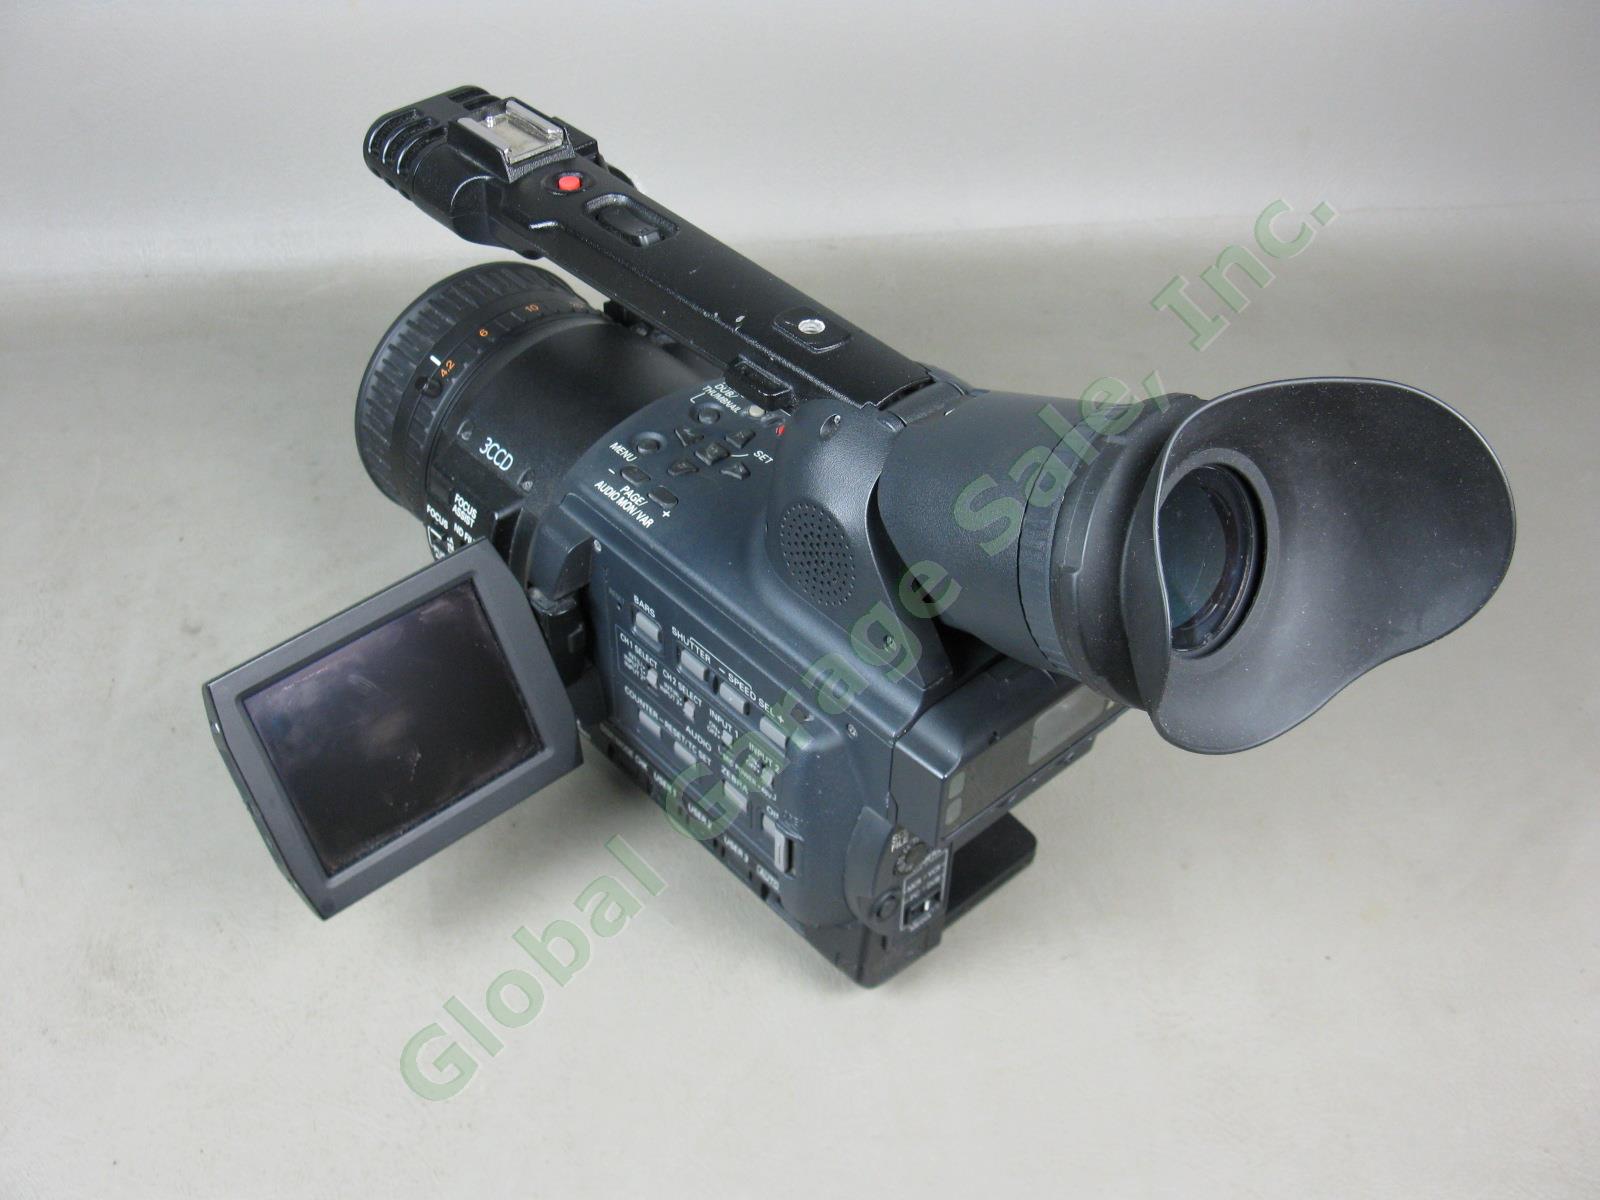 Panasonic AG-HVX200P DVCPRO 3CCD HD P2 MiniDV Pro Camcorder Video Camera Bundle 2